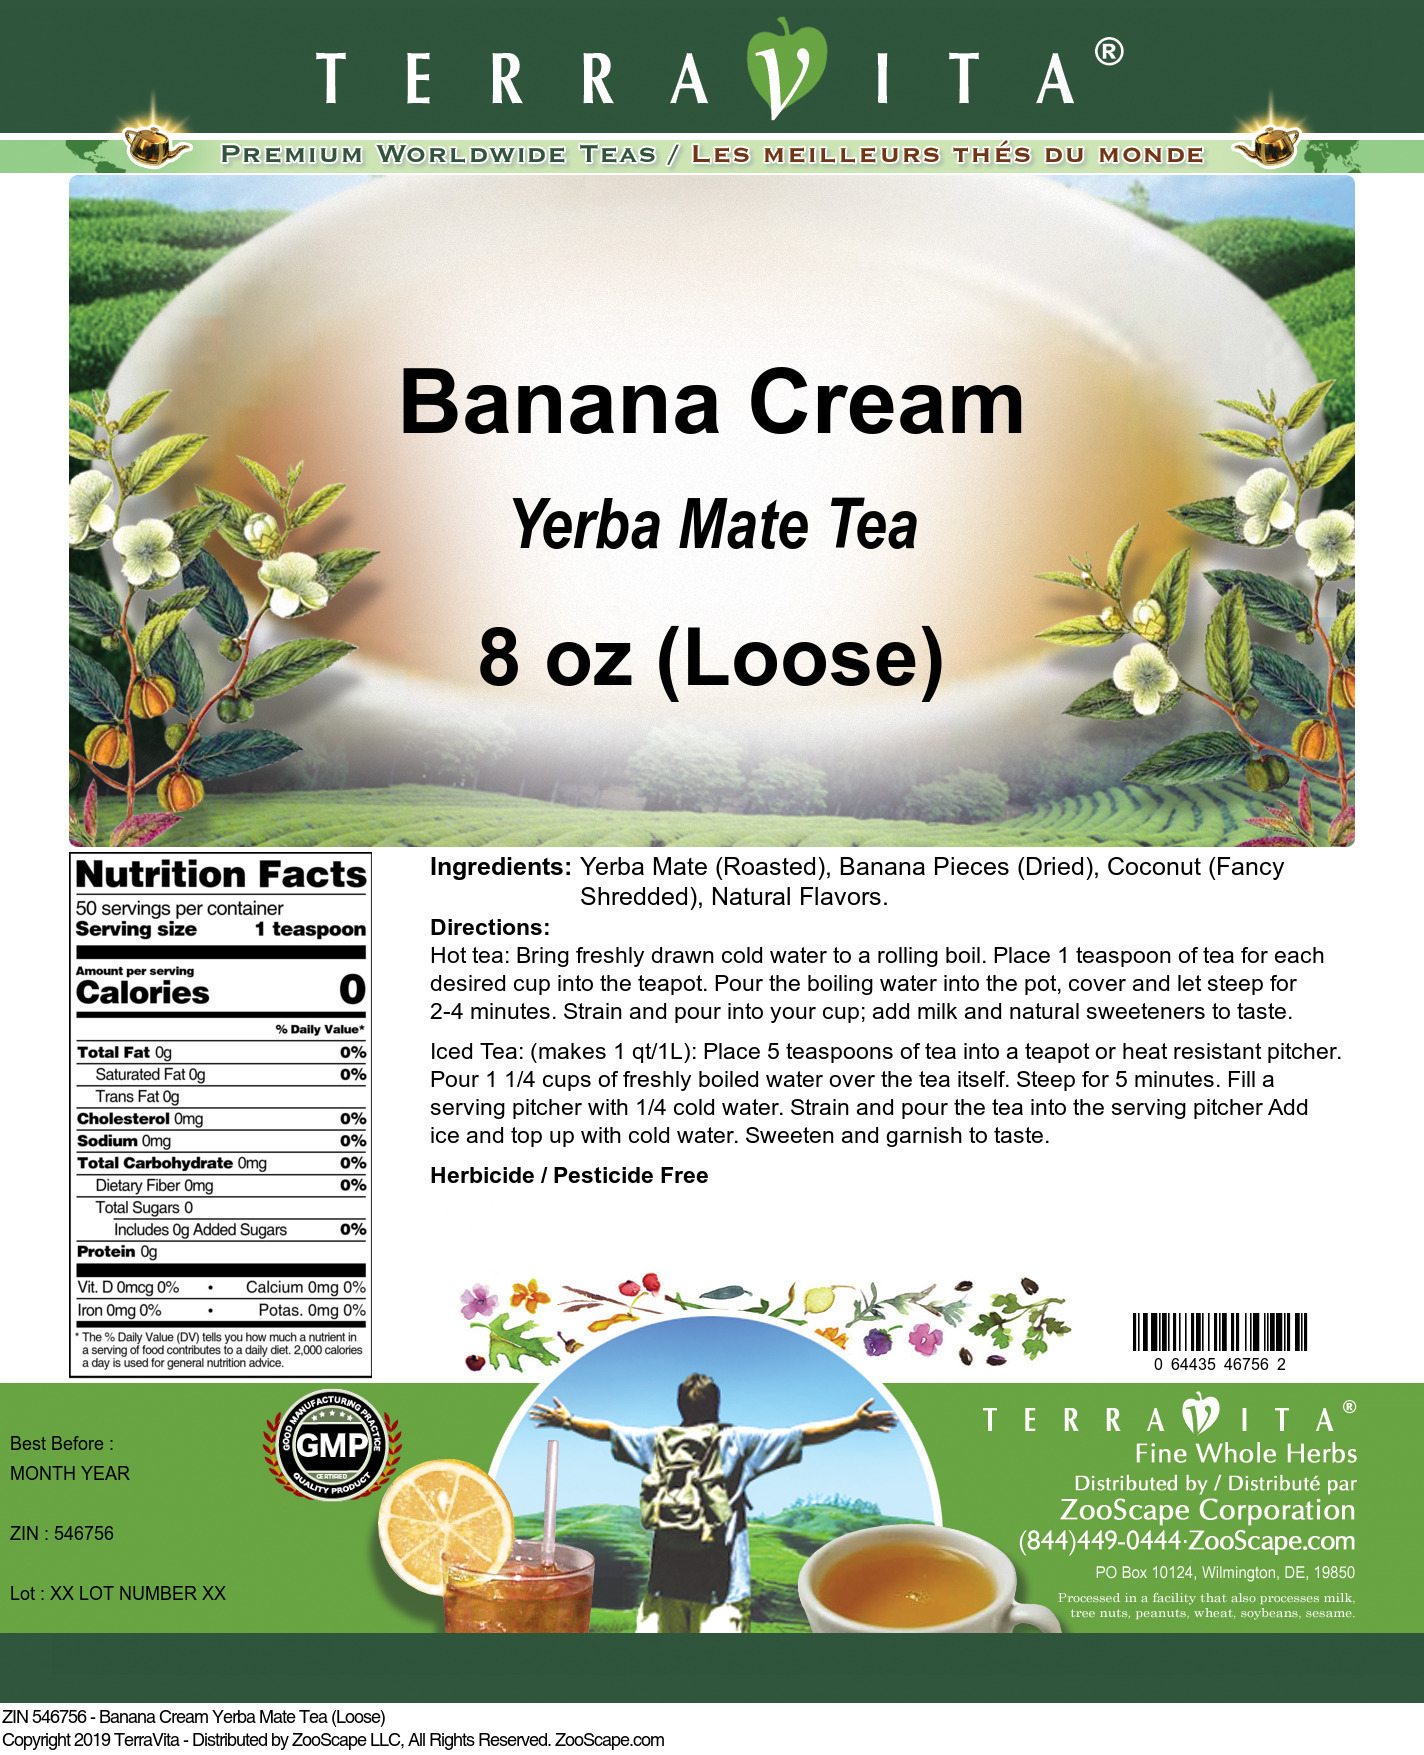 Banana Cream Yerba Mate Tea (Loose) - Label